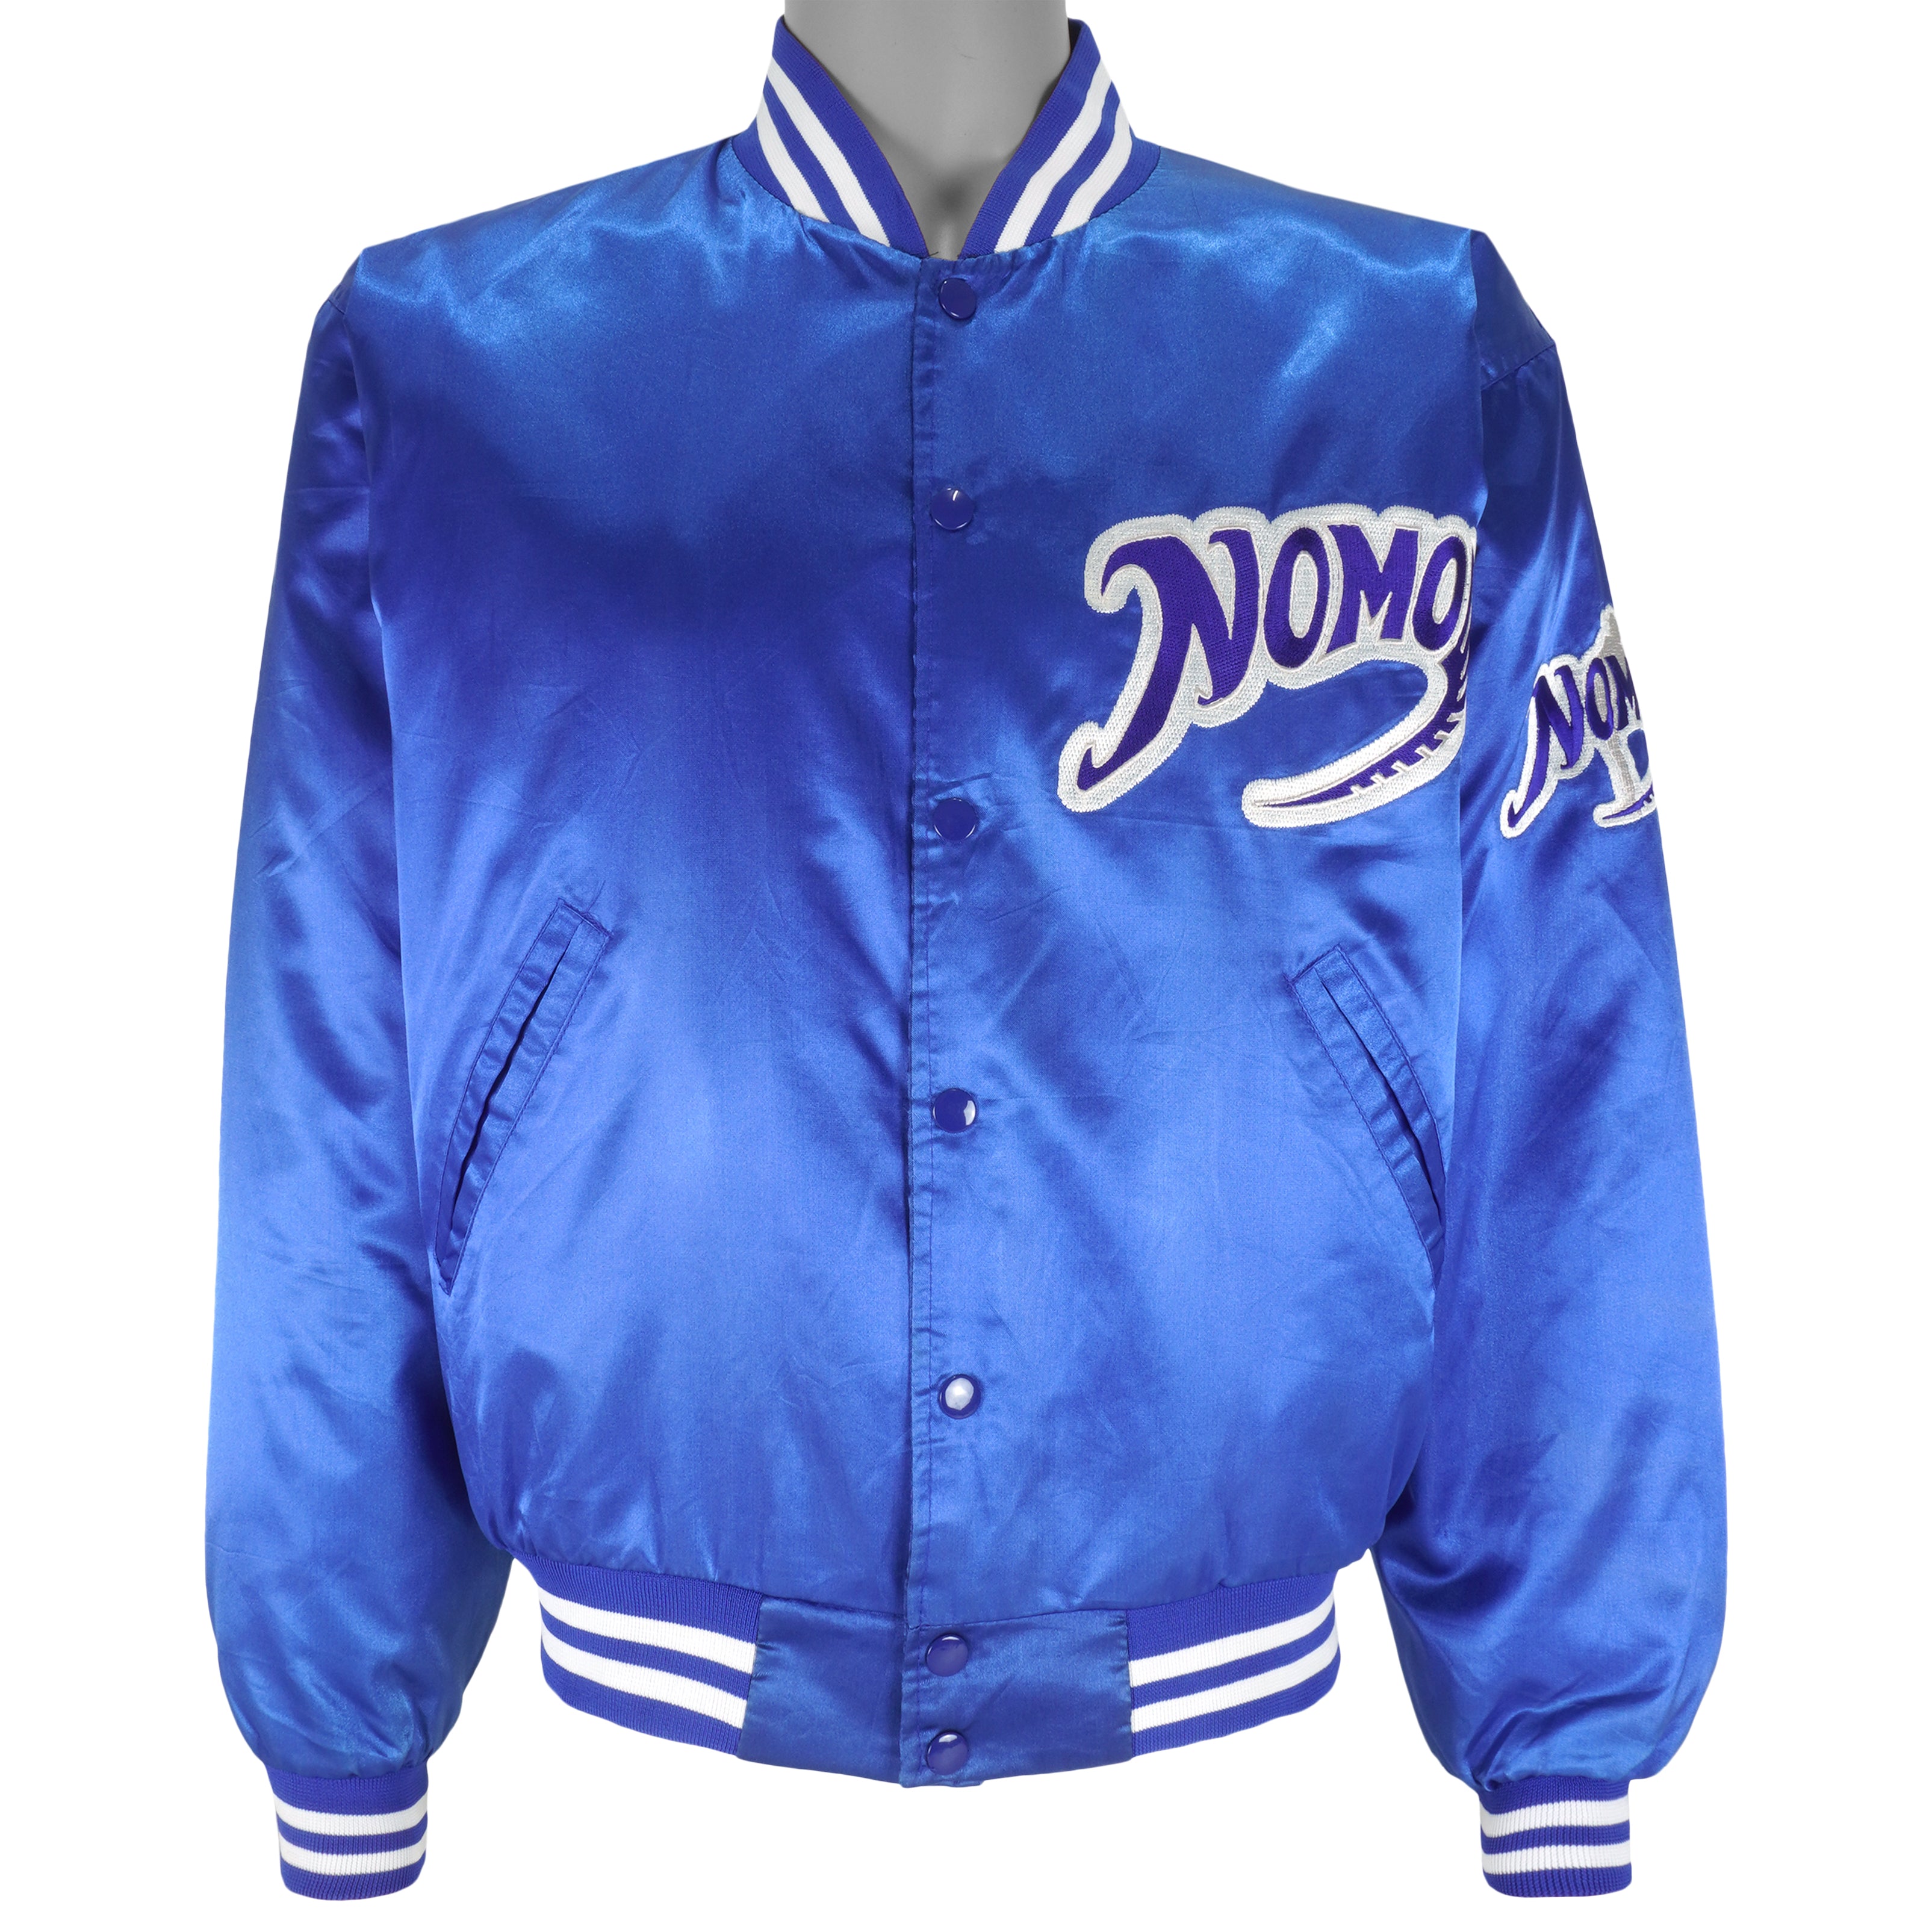 HIDEO NOMO Los Angeles DODGERS Vintage STARTER Jacket NEW Baseball MLB  Medium